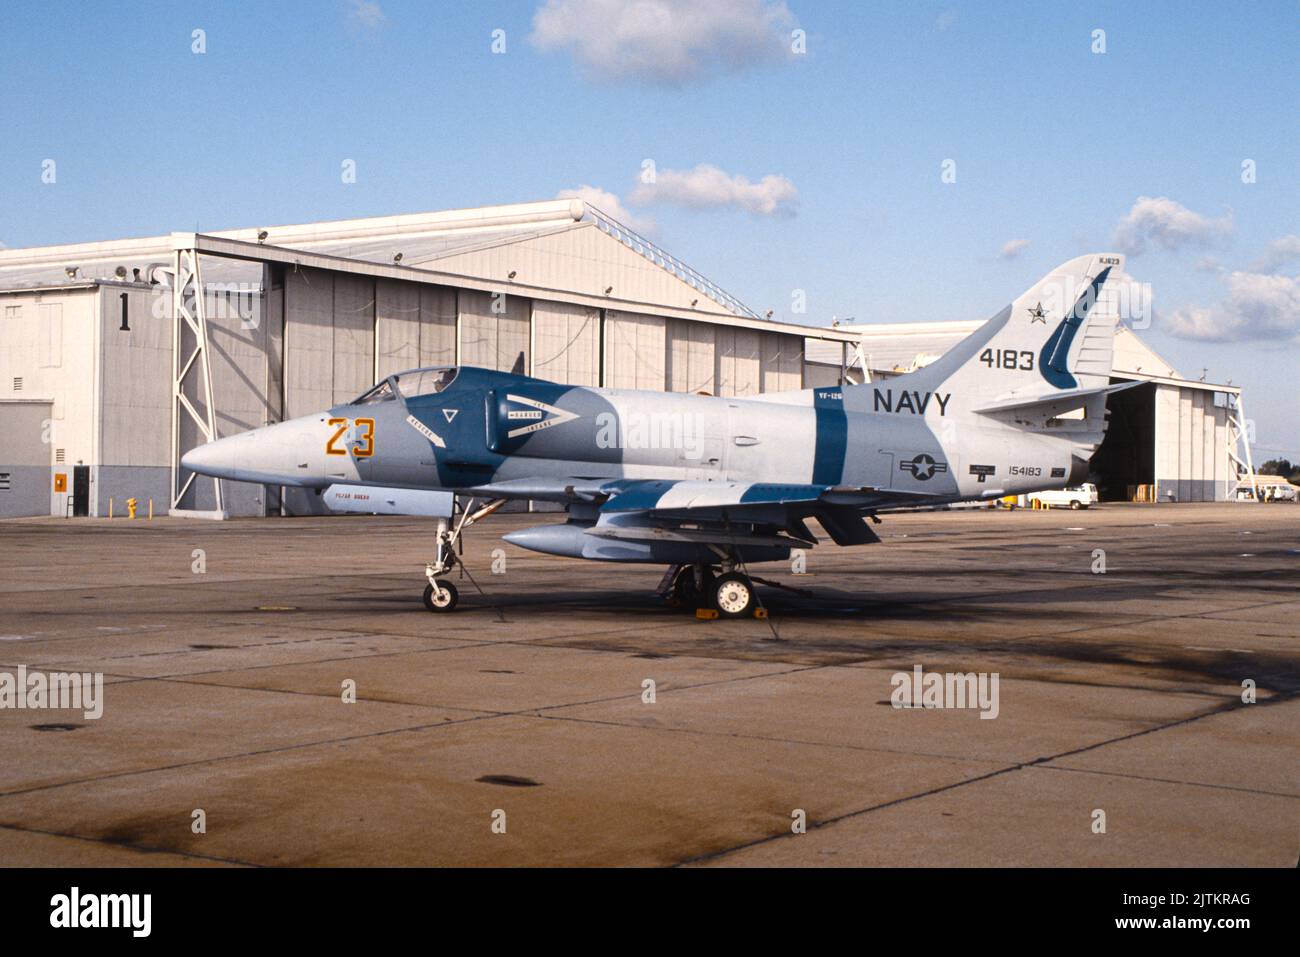 United States Navy Douglas A-4 Skyhawk from VF-126, Pacific Fleet Adversary Squadron on the tarmac at NAS Miramar in San Diego, California Stock Photo